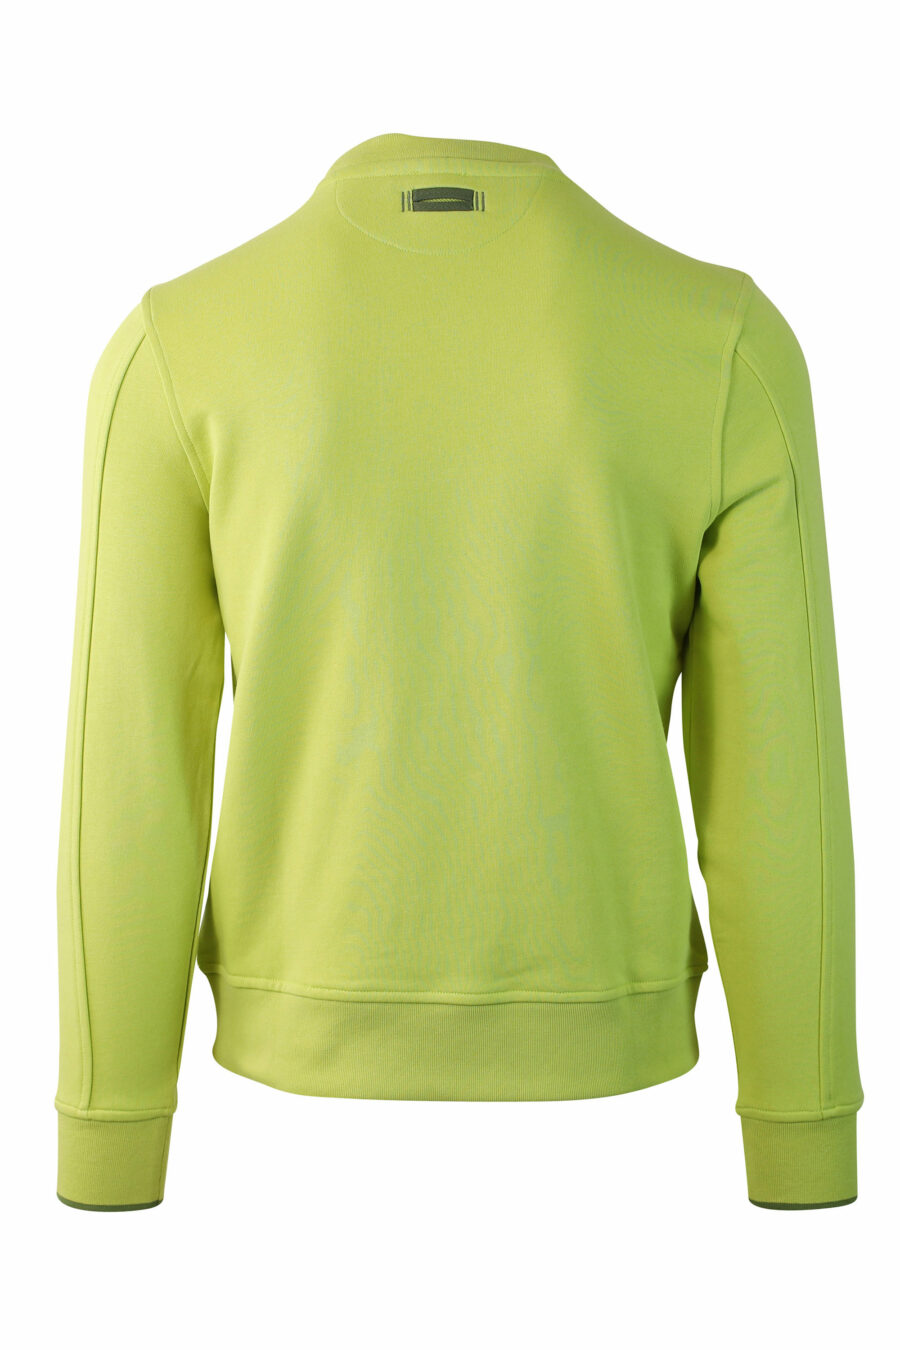 Sweatshirt vert tilleul avec maxilogue en velours monochrome - IMG 0075 1